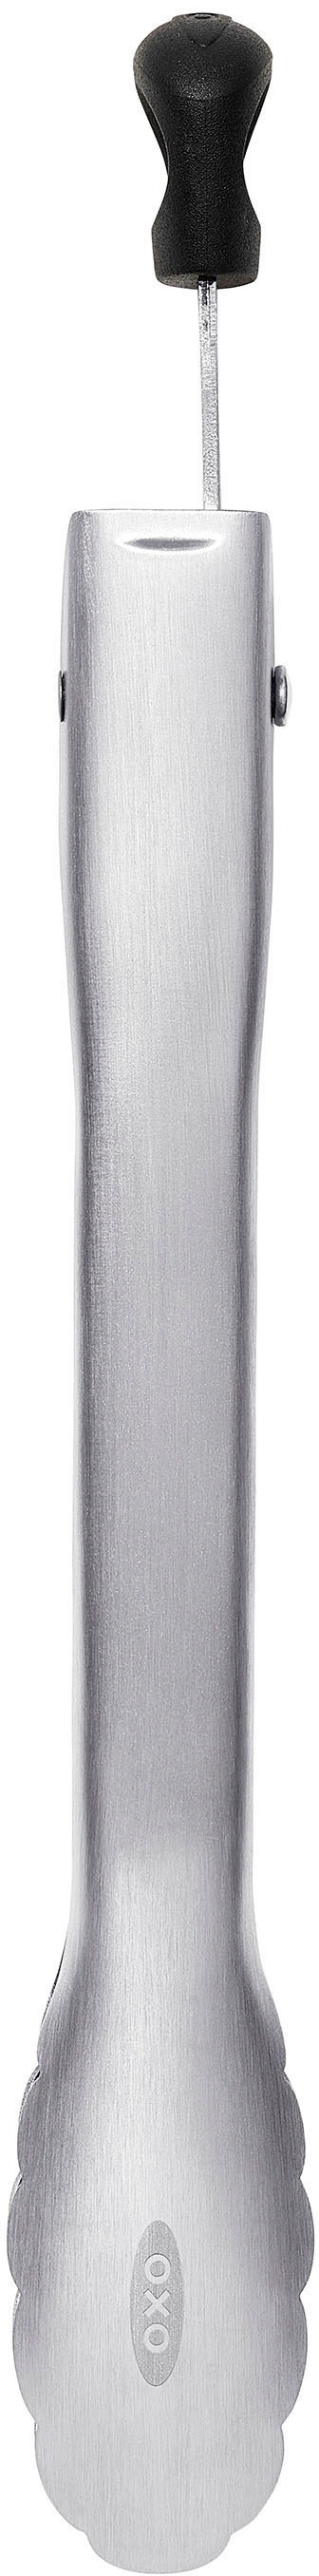 OXO Good Grips Servierzange, Minizange, Edelstahl, 18 cm